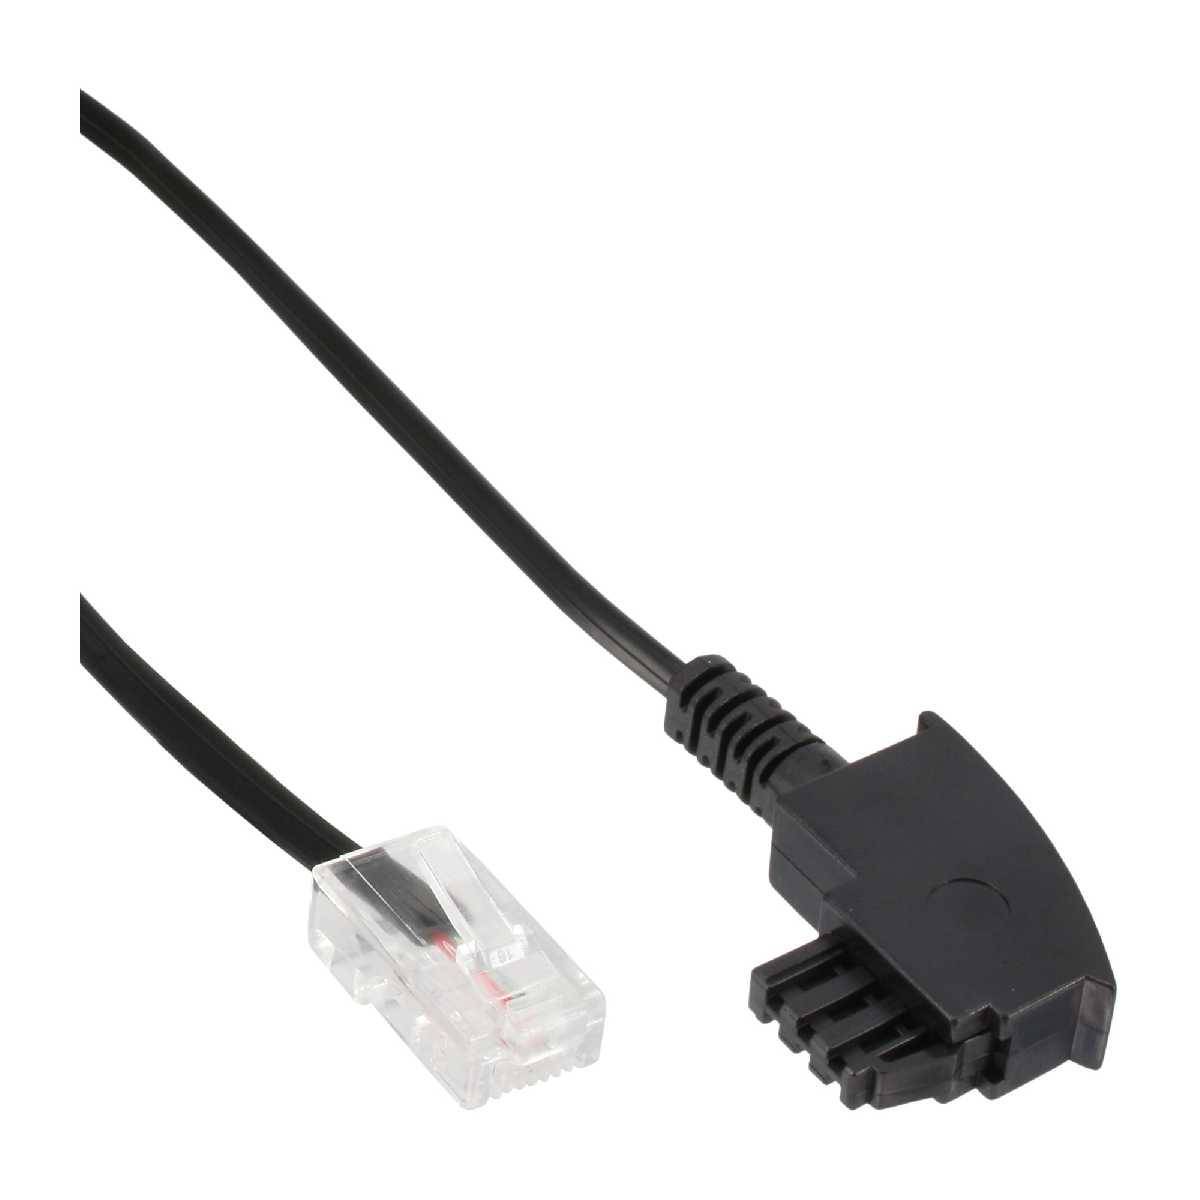 Kabel TAE-F für DSL-Router TAE-F Stecker an RJ45 8P2C 2m